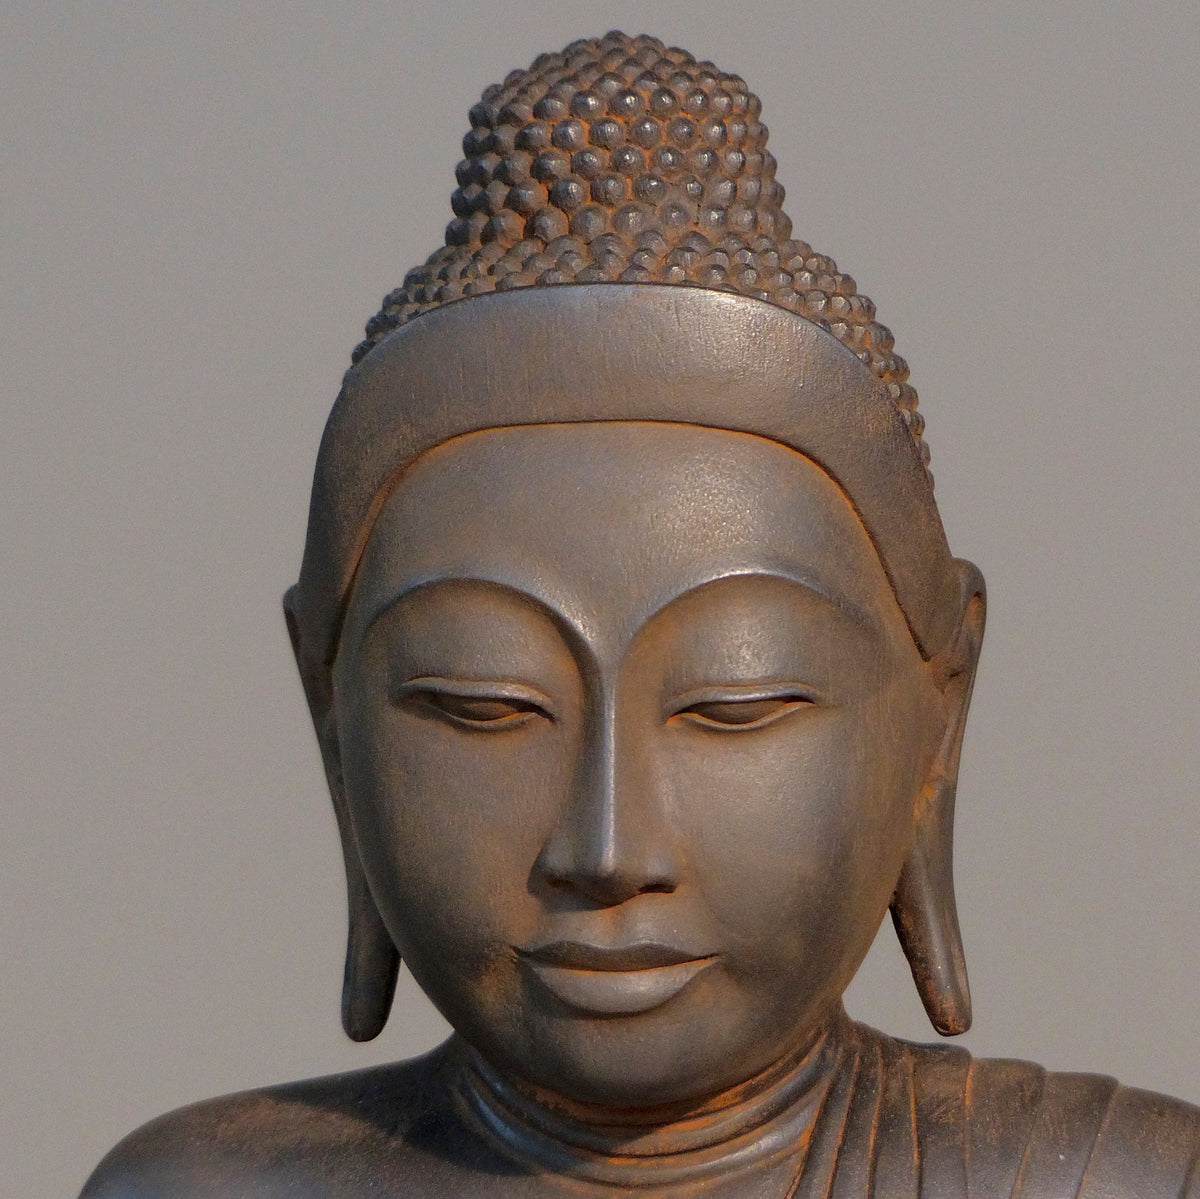 Buy Burmese Buddha Statue in Mandalay Style Online – Garden of Buddhas